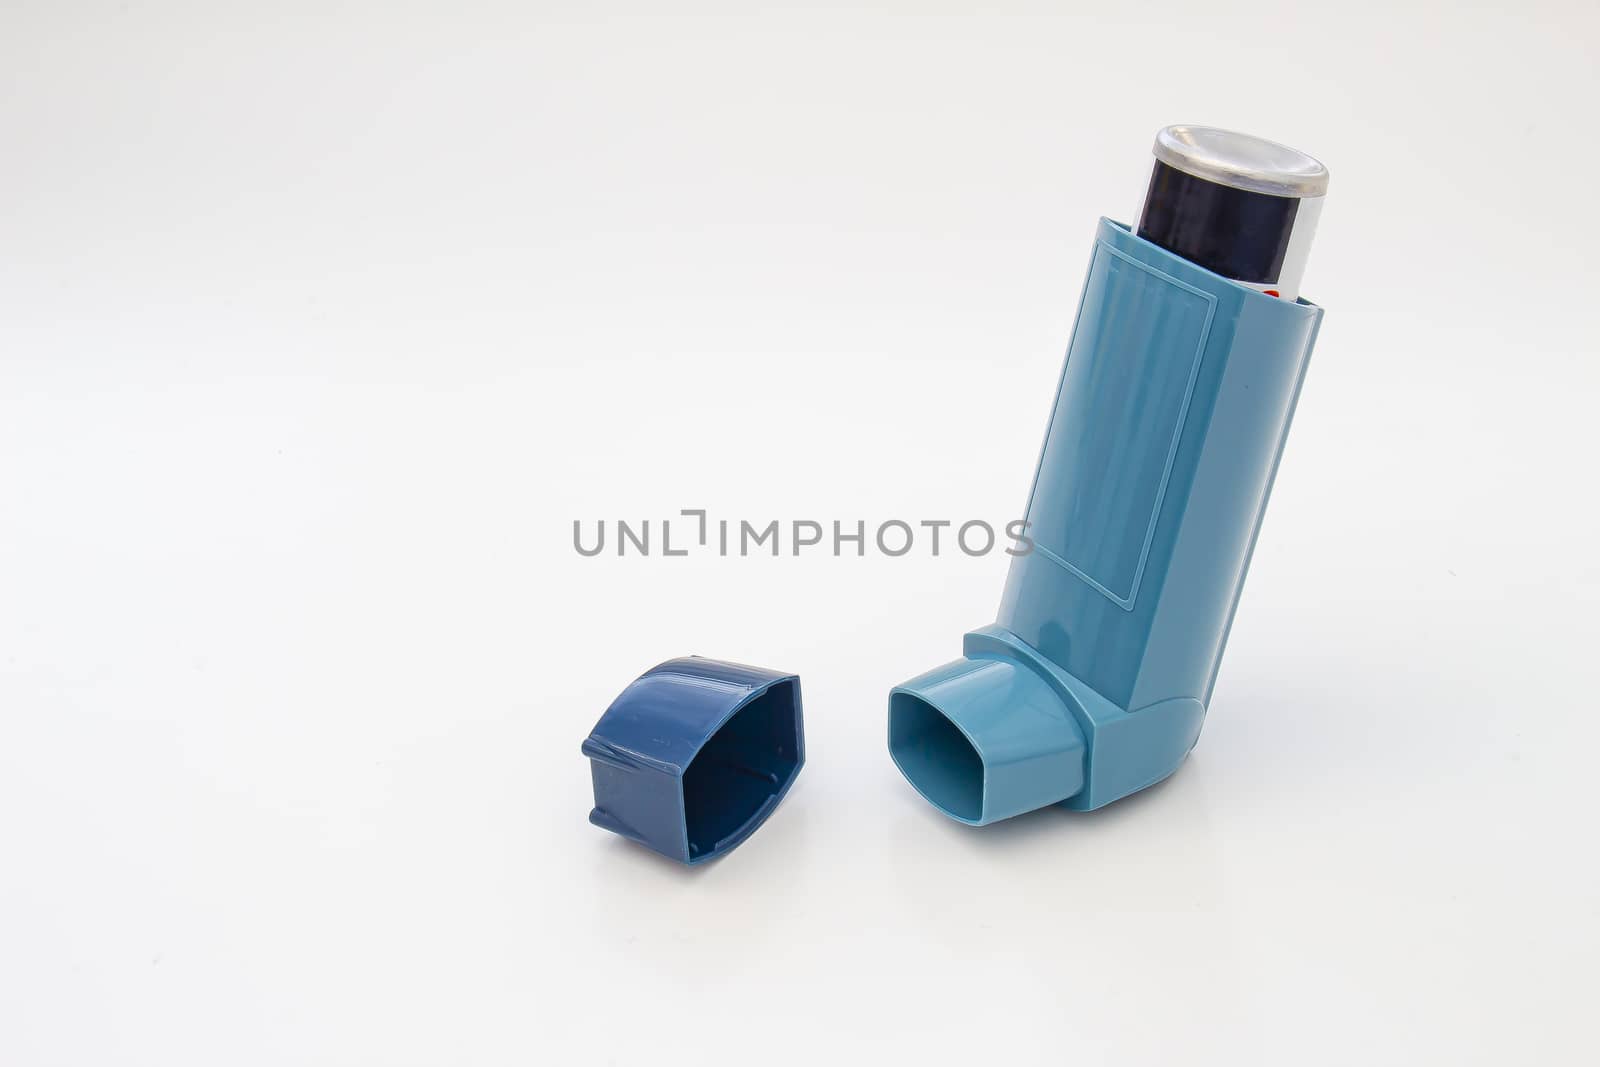 asthma inhaler by oasisamuel